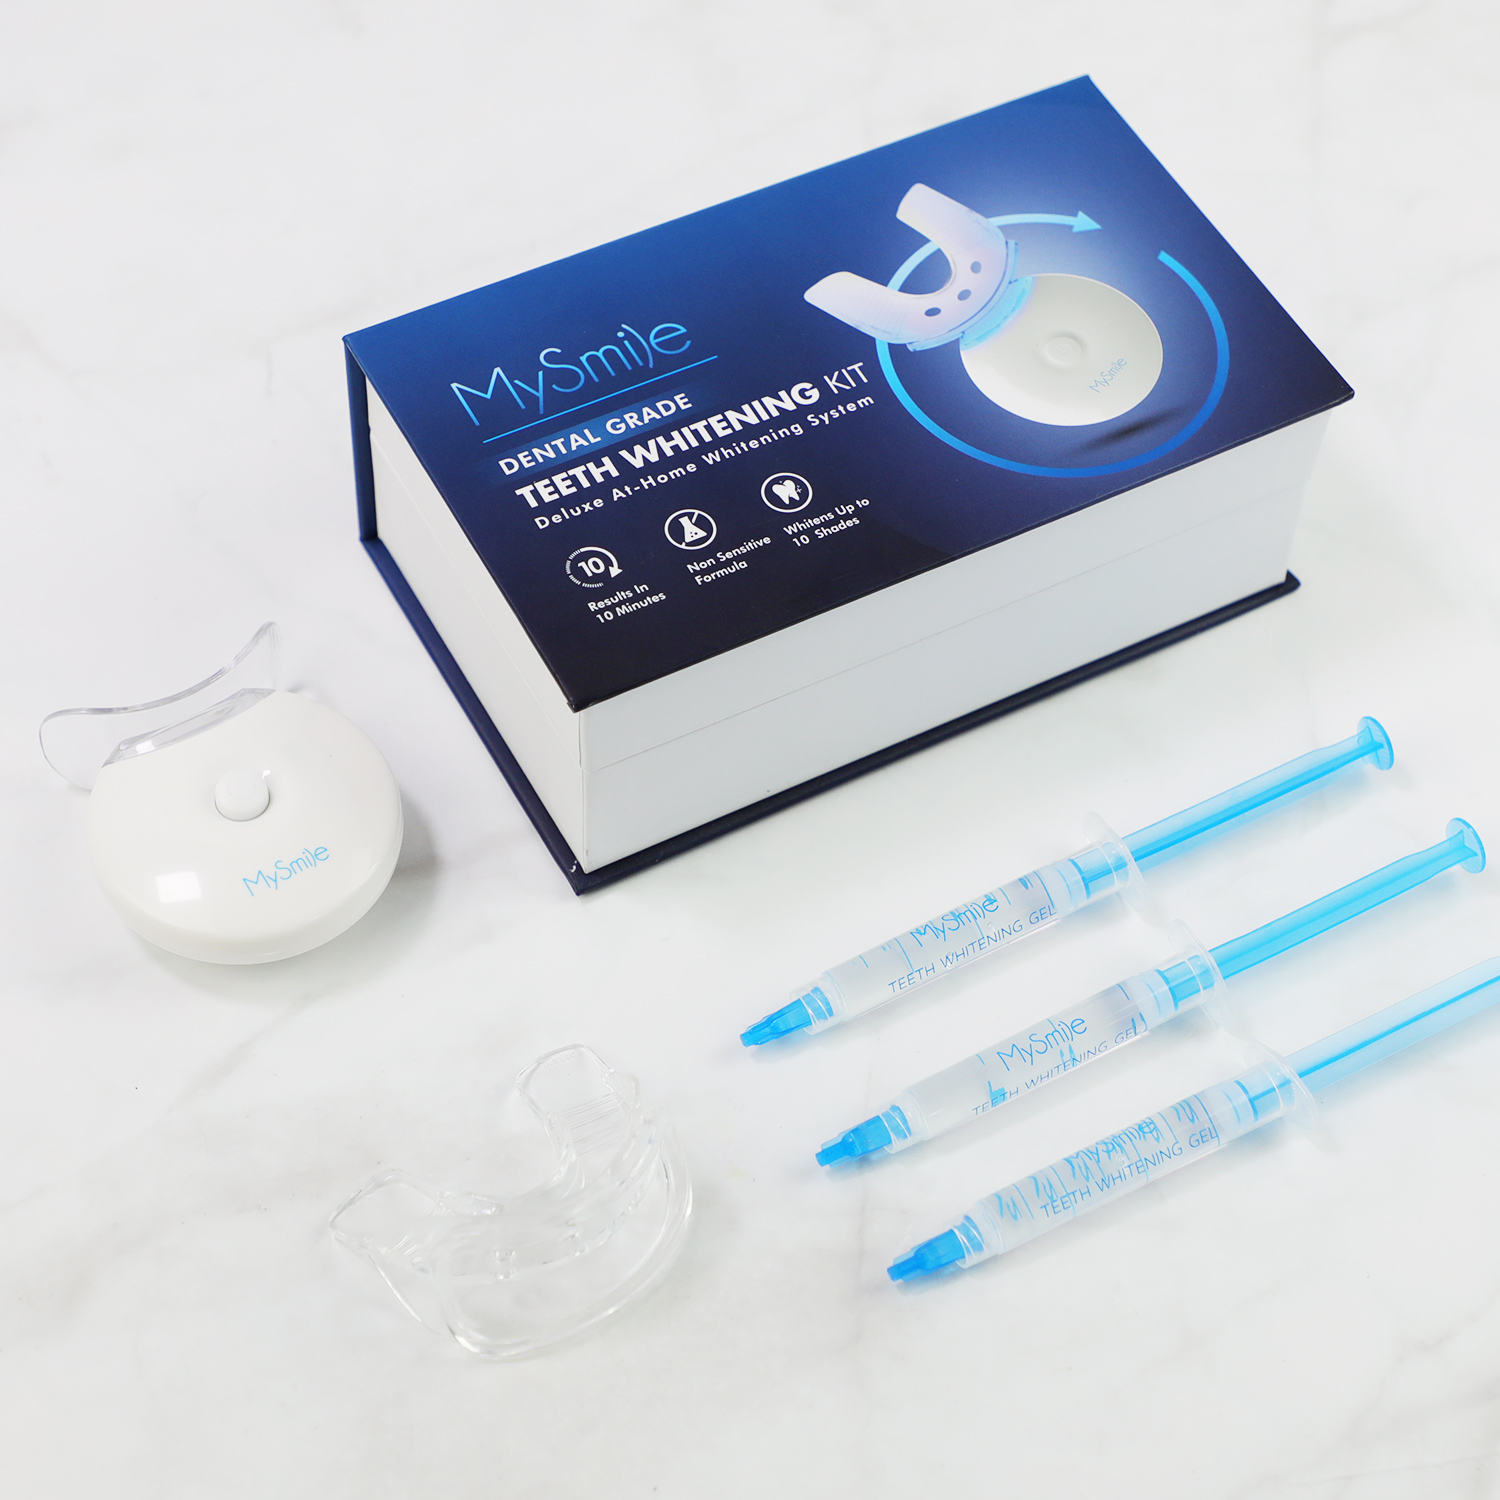 Mysmile's Teeth Whitening Kit